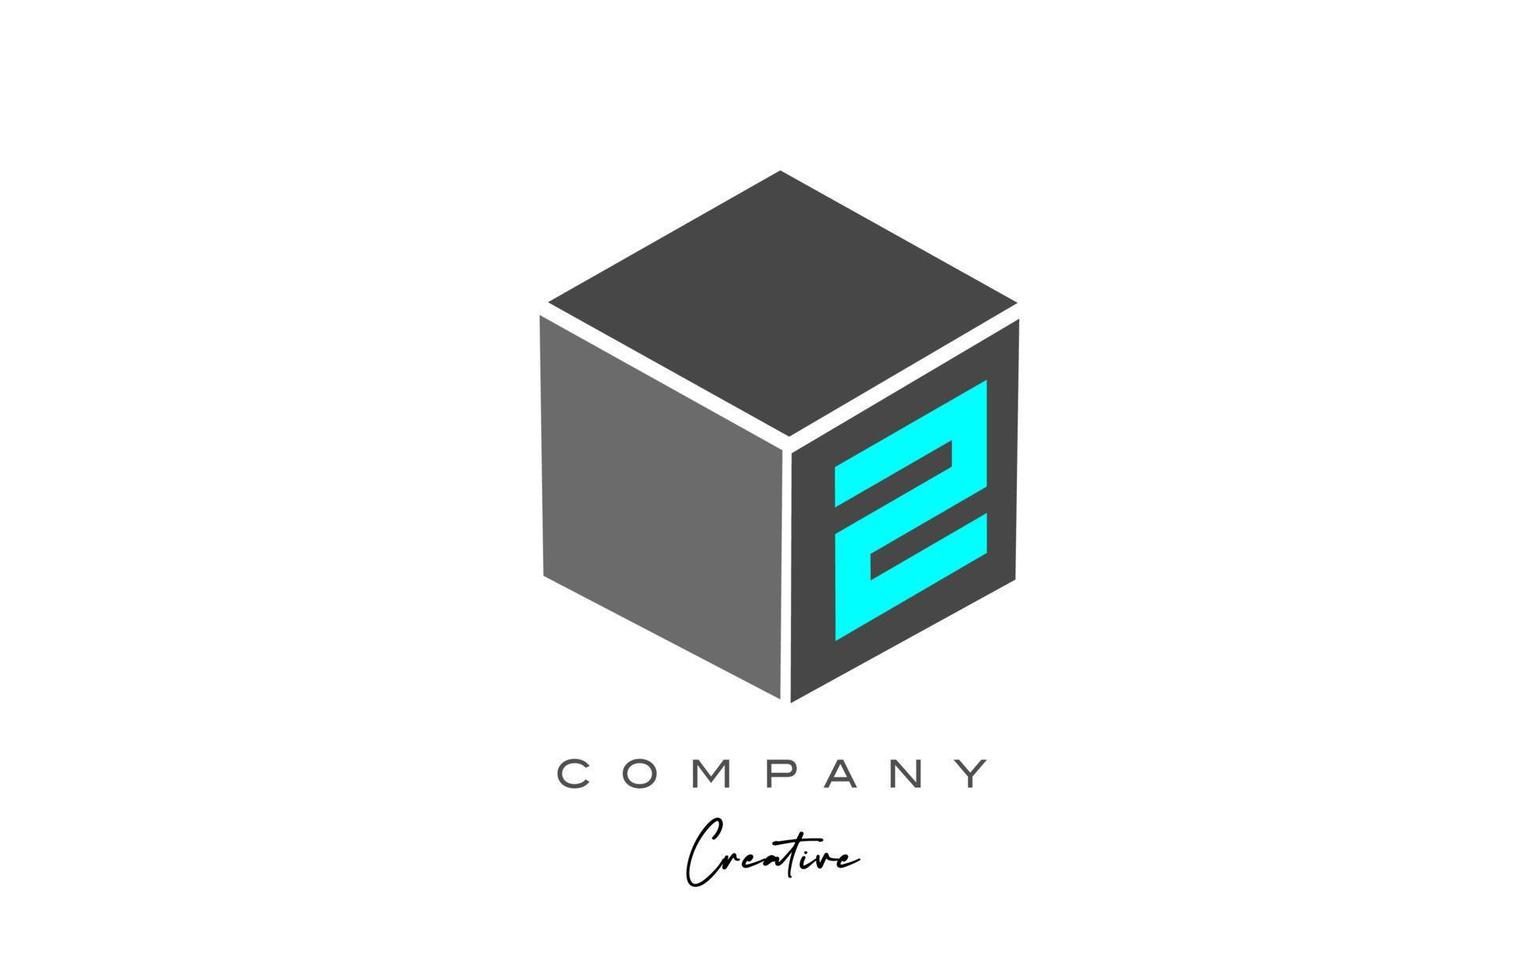 s ícone do logotipo da letra do alfabeto da letra do cubo cinza na cor azul. modelo de design criativo para negócios e empresa vetor